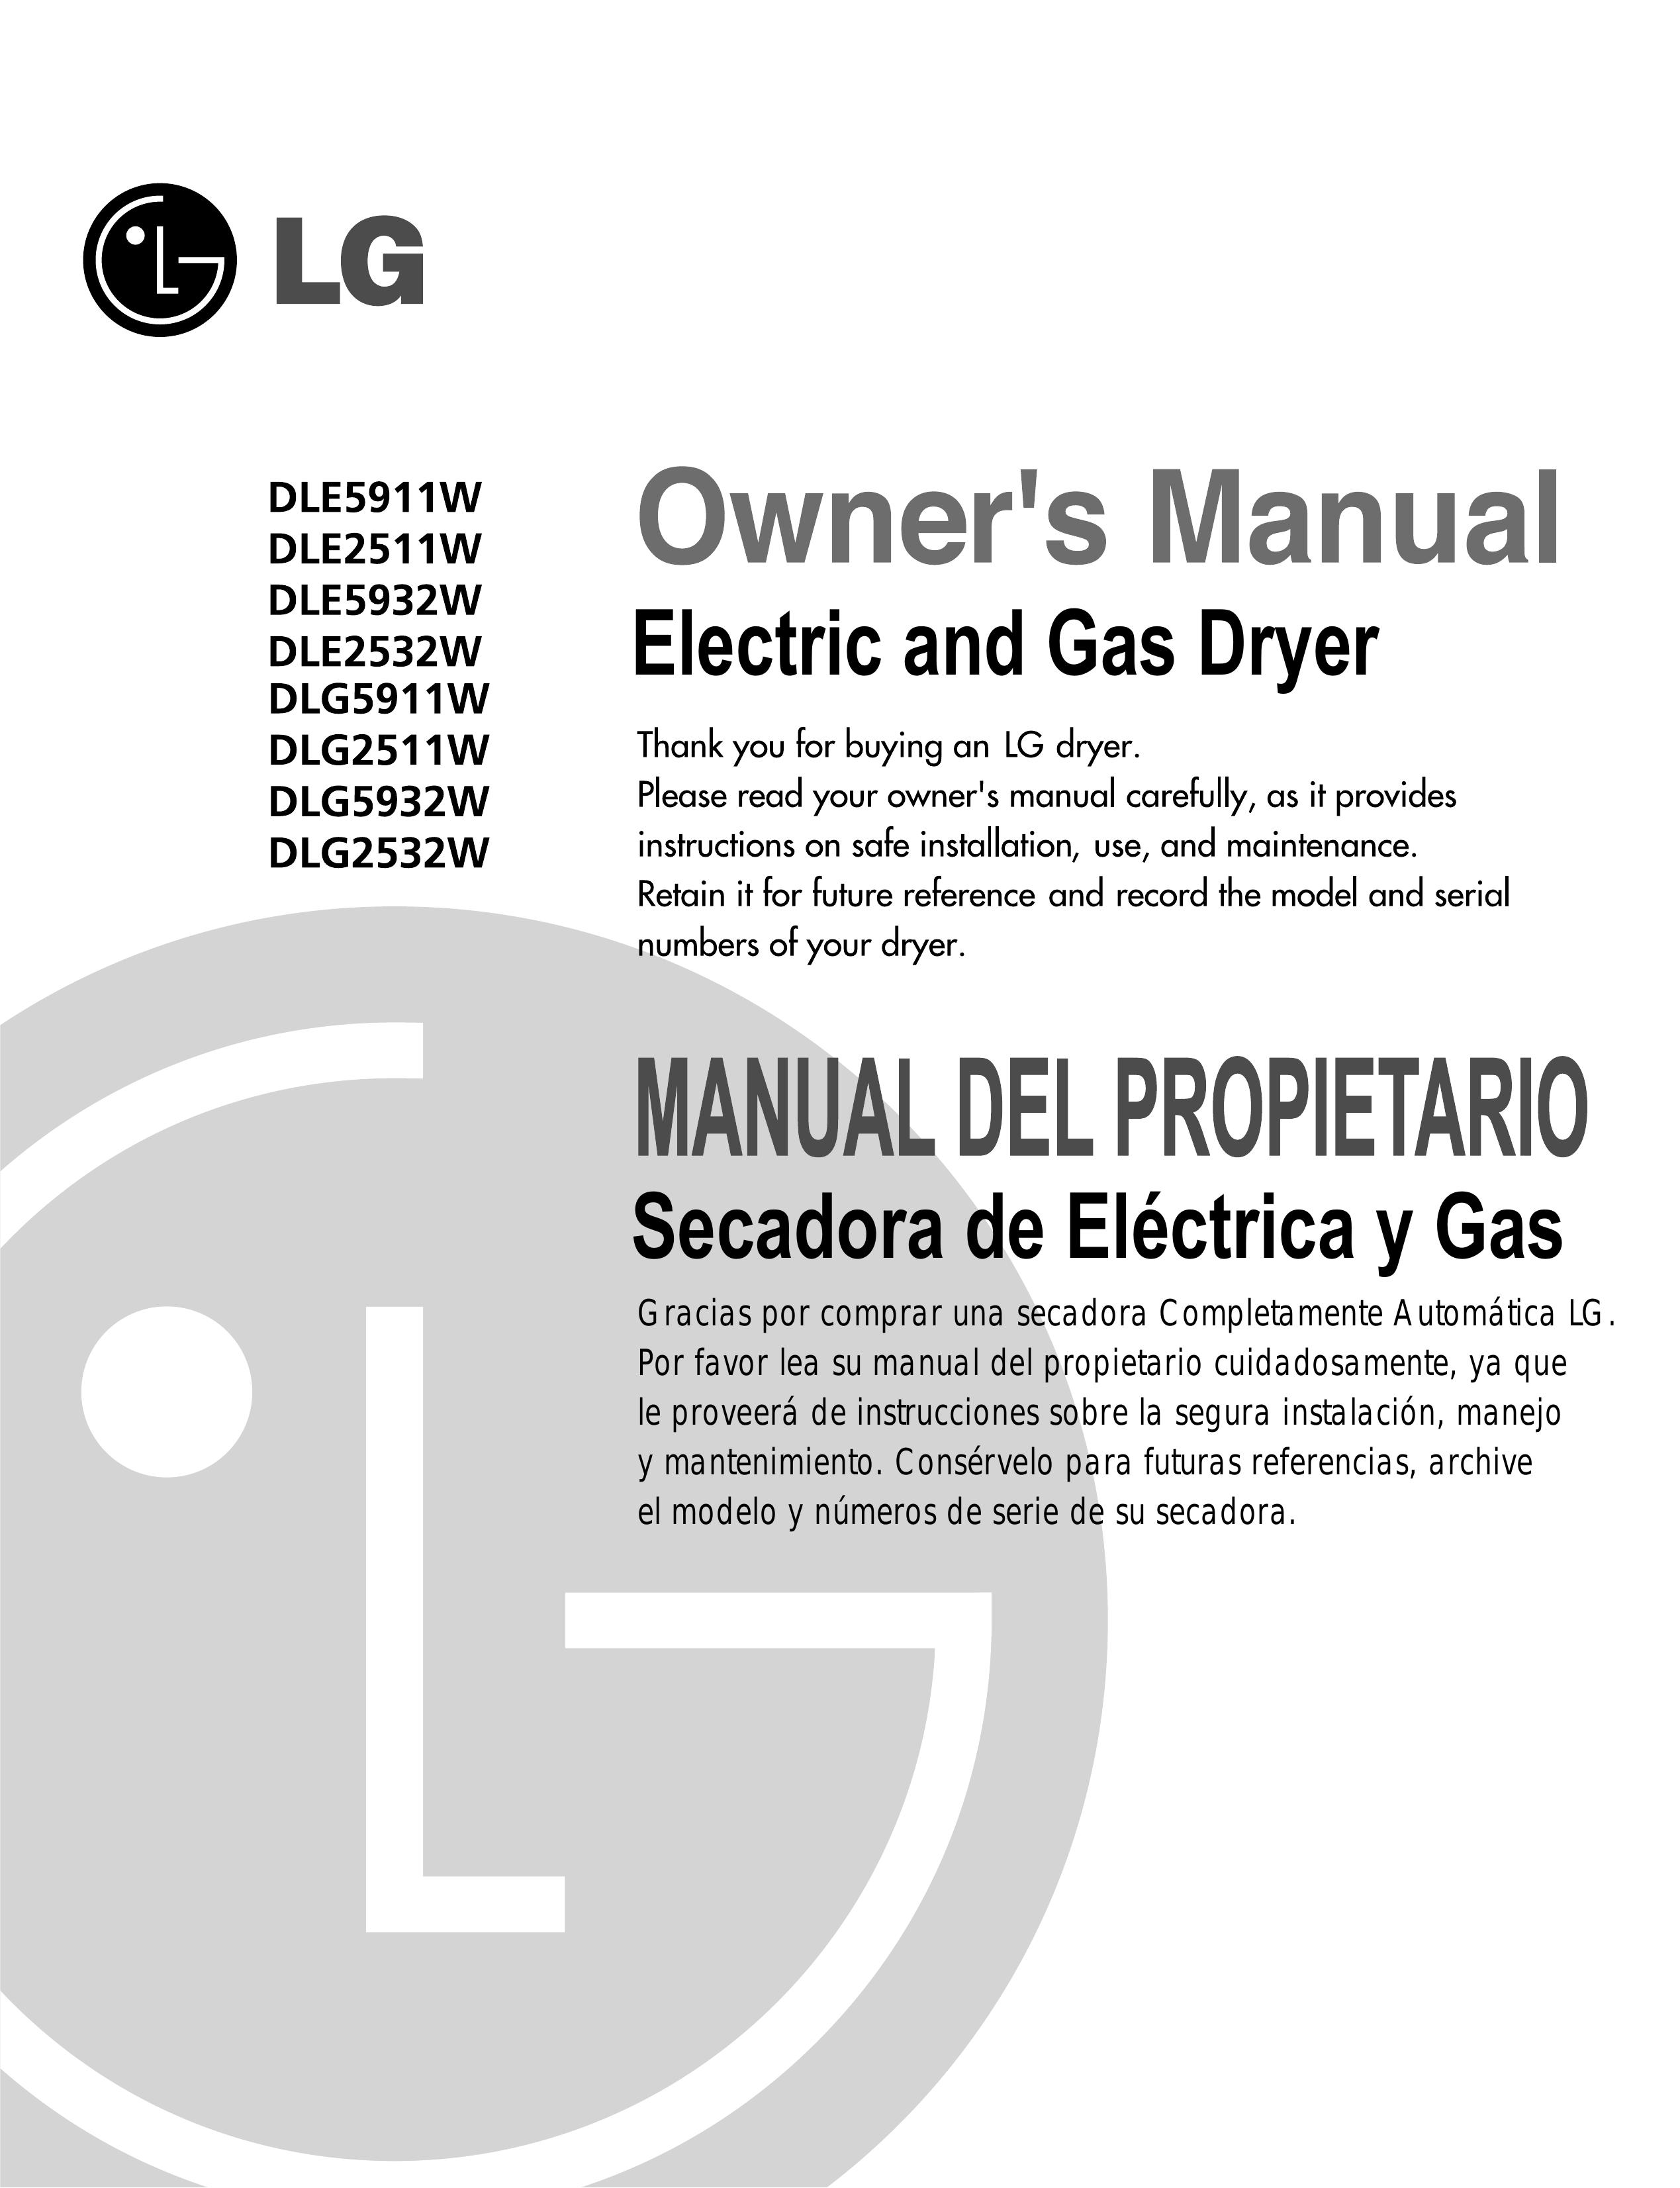 LG Electronics D5932W Clothes Dryer User Manual